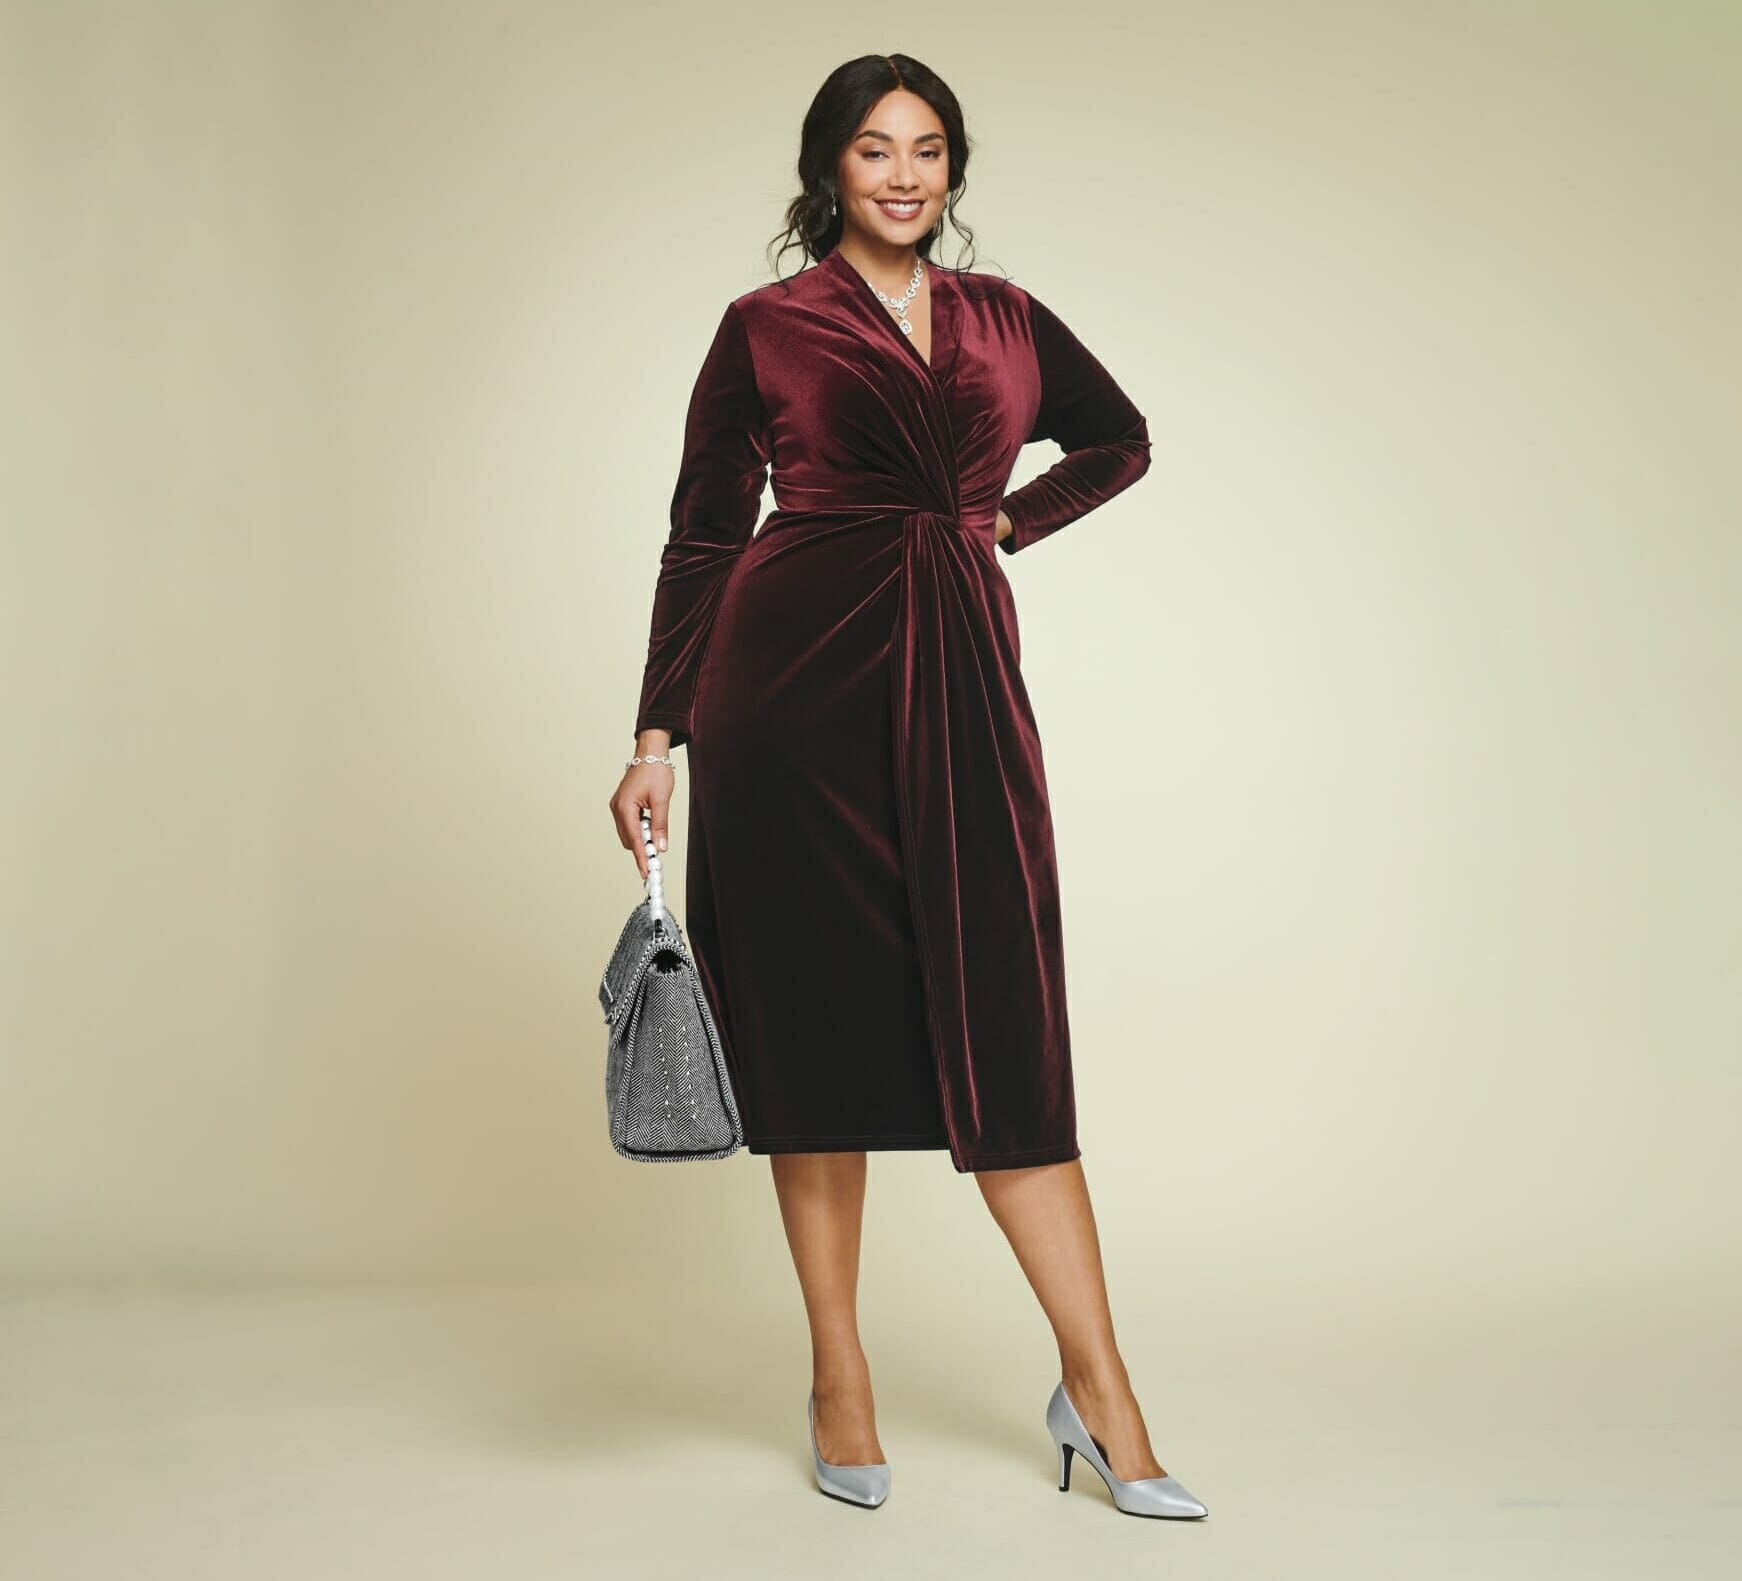 plus size model wearing a burgundy velvet dress with silver metallic pumps